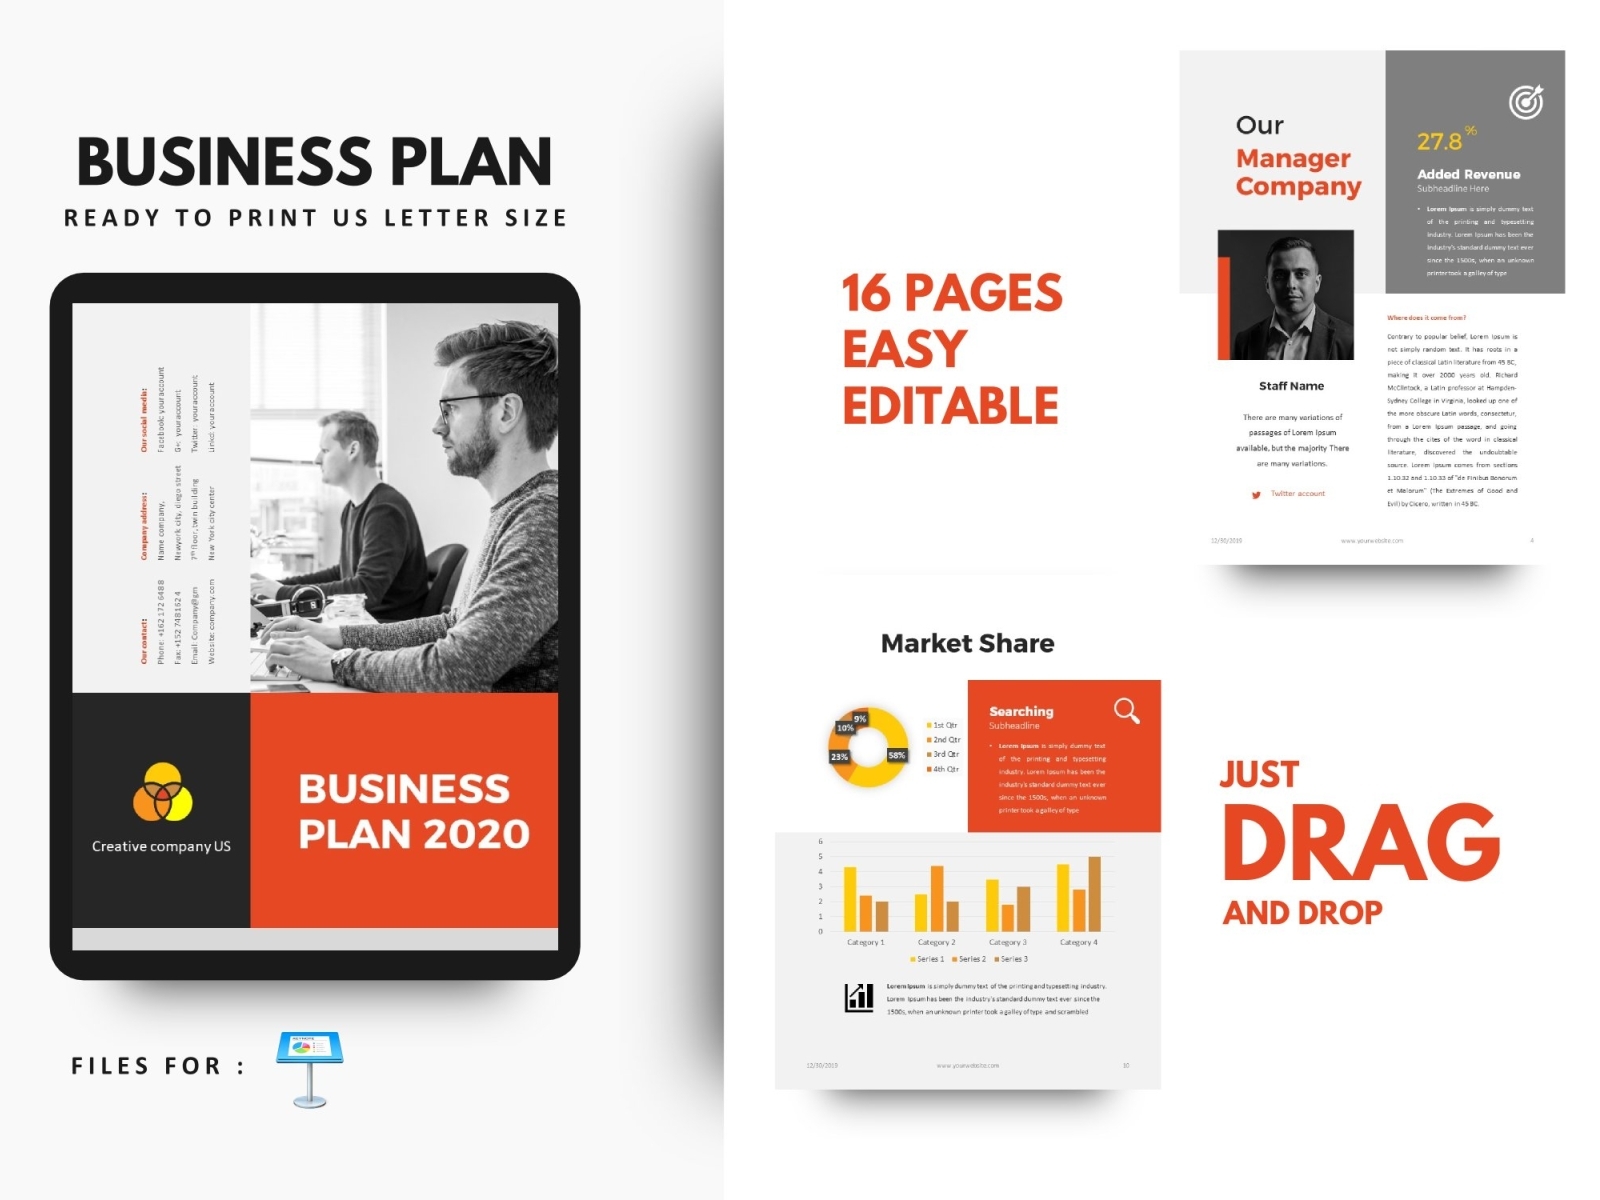 Business plan template keynote by Brochure Design on Dribbble